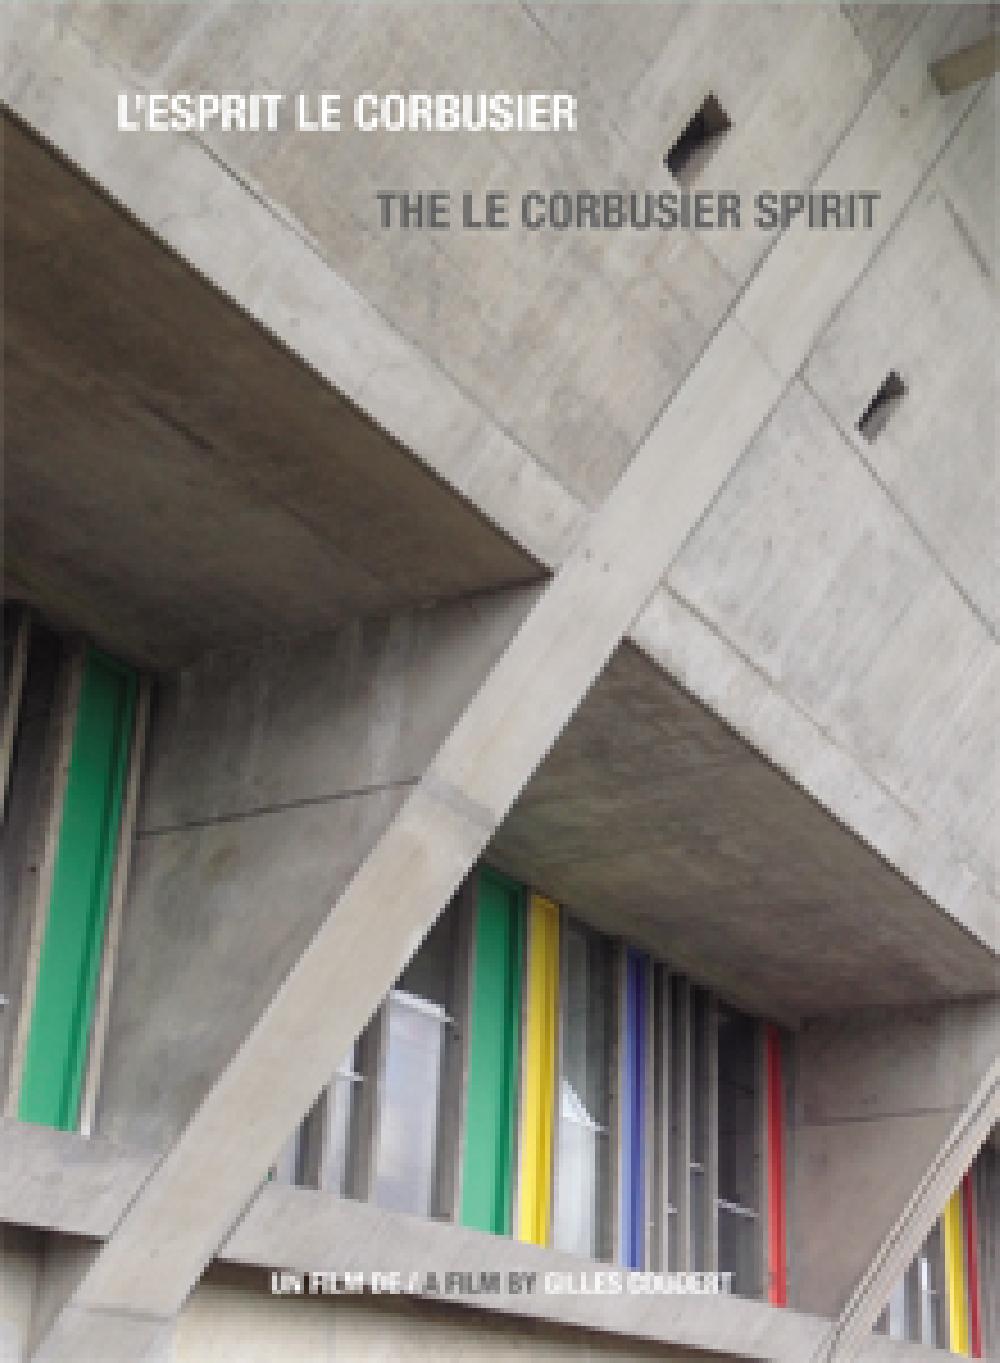 The Corbusier spirit